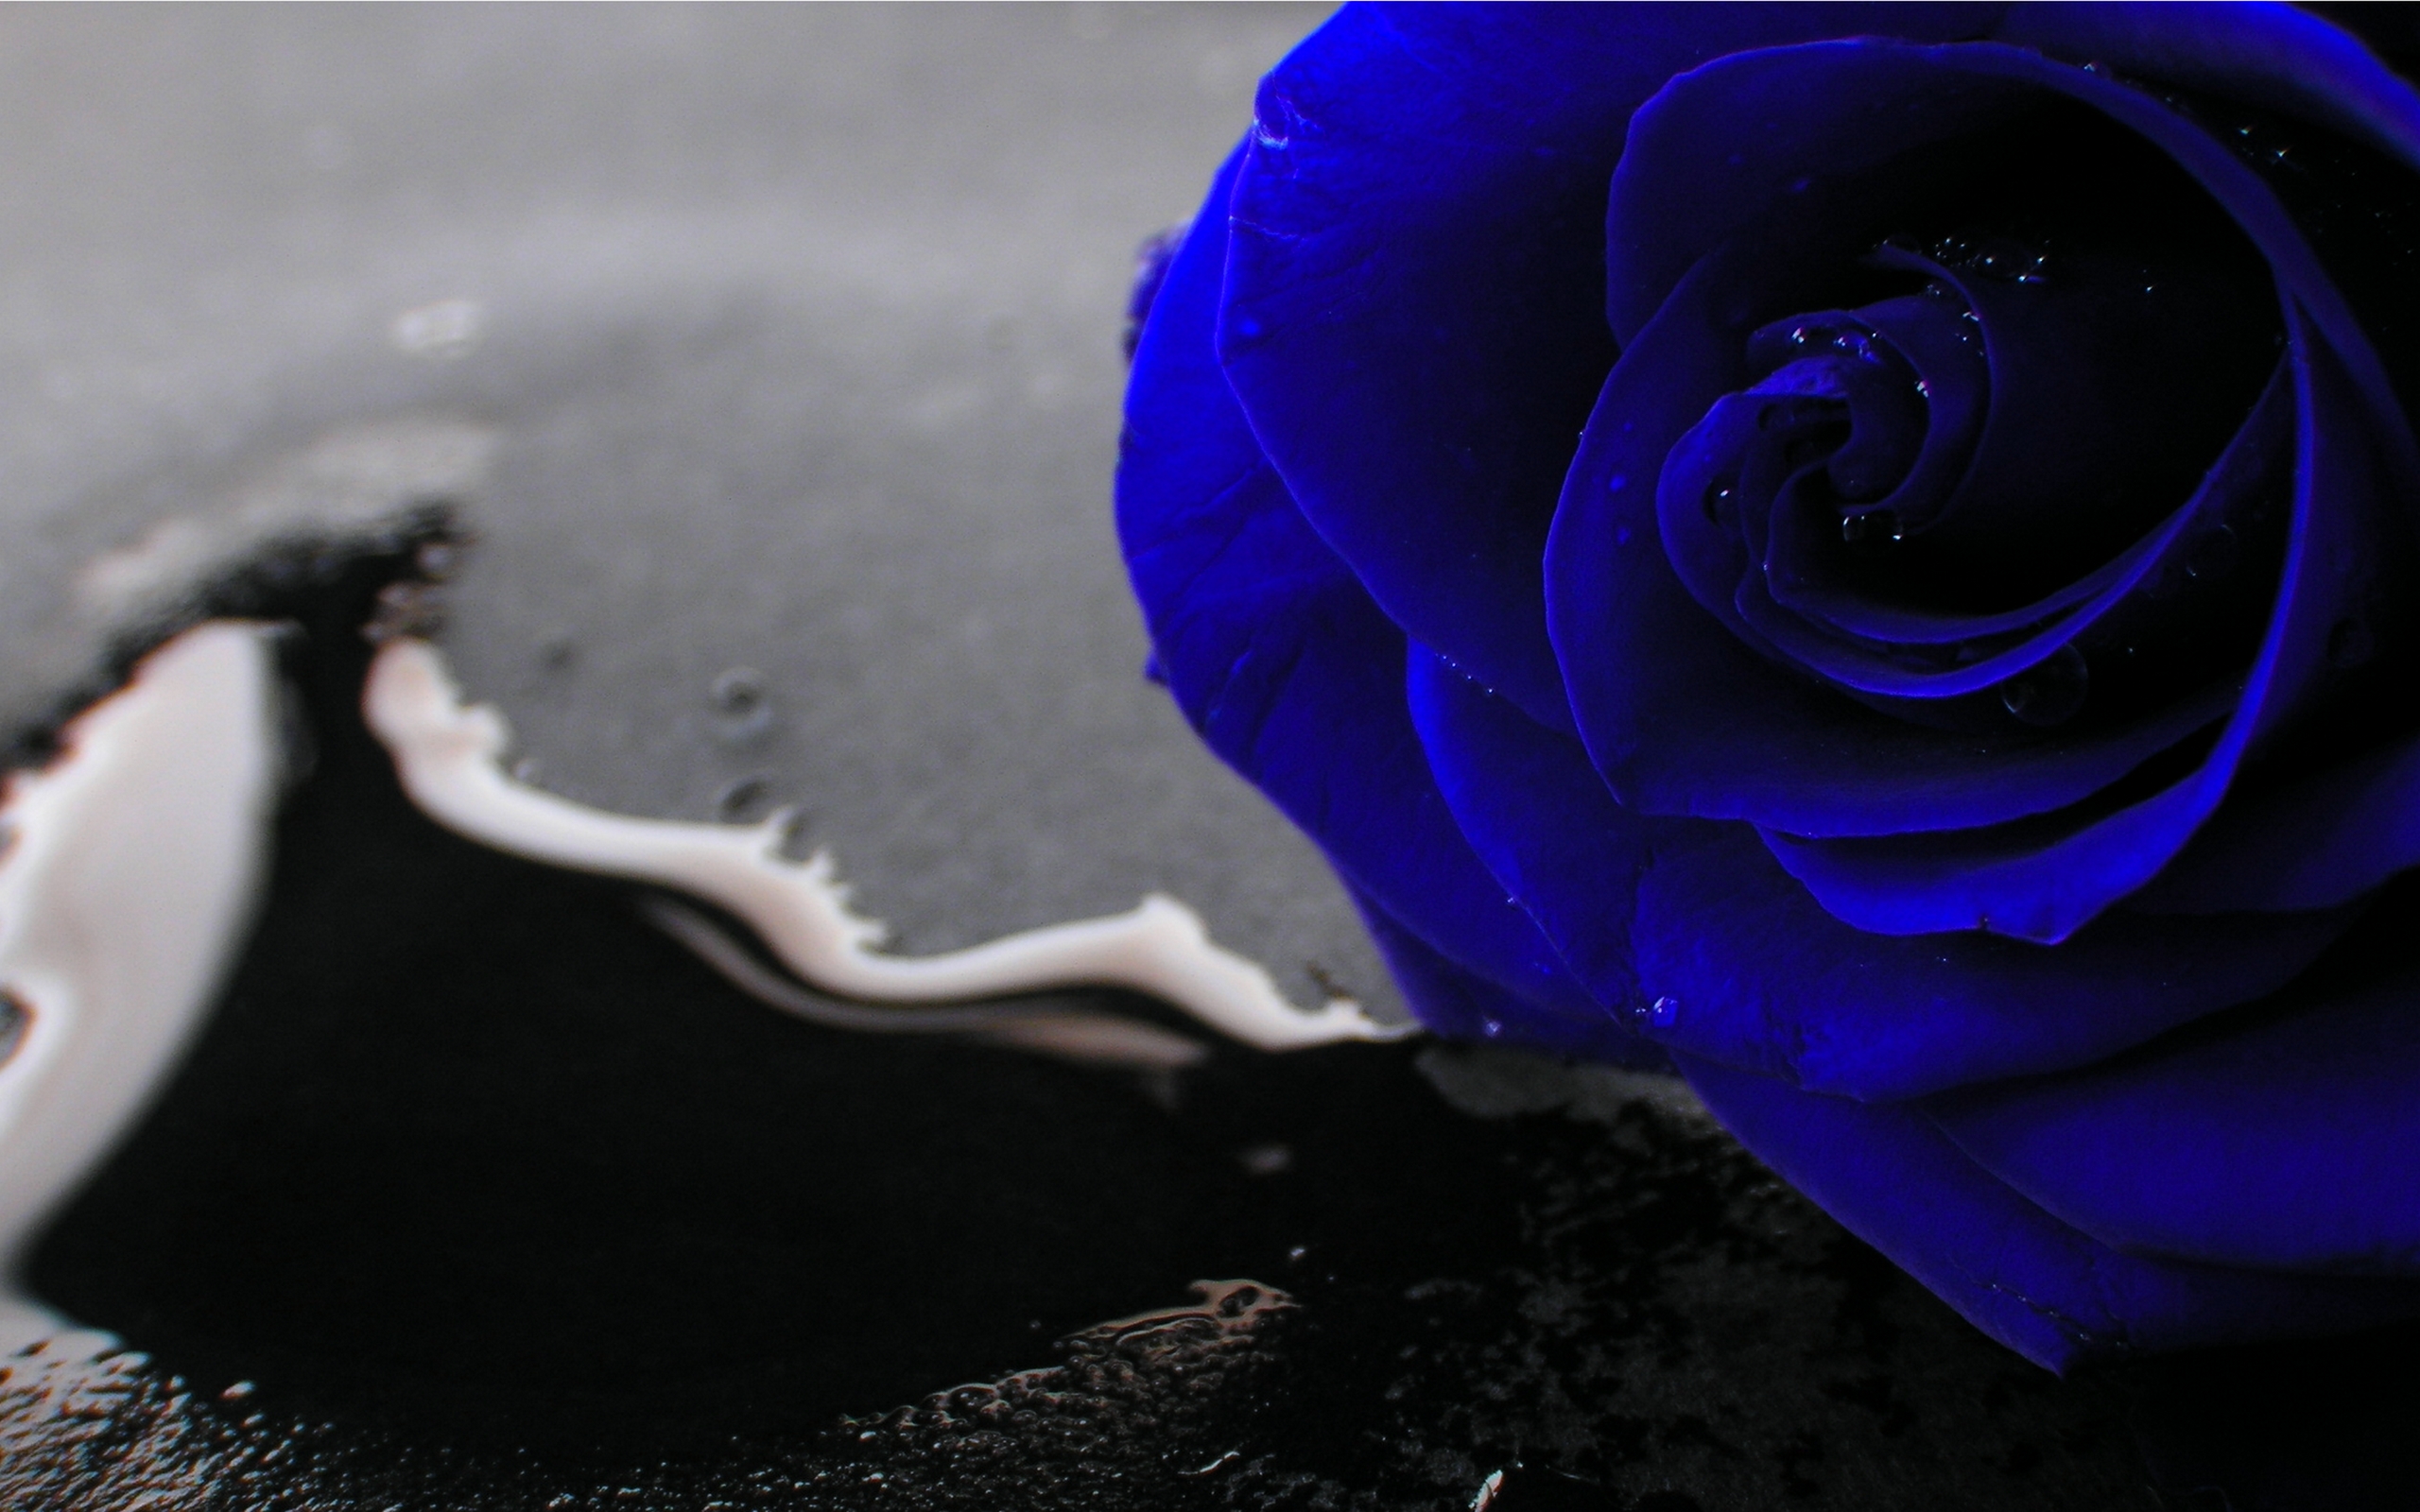 Pin Dark Blue Roses